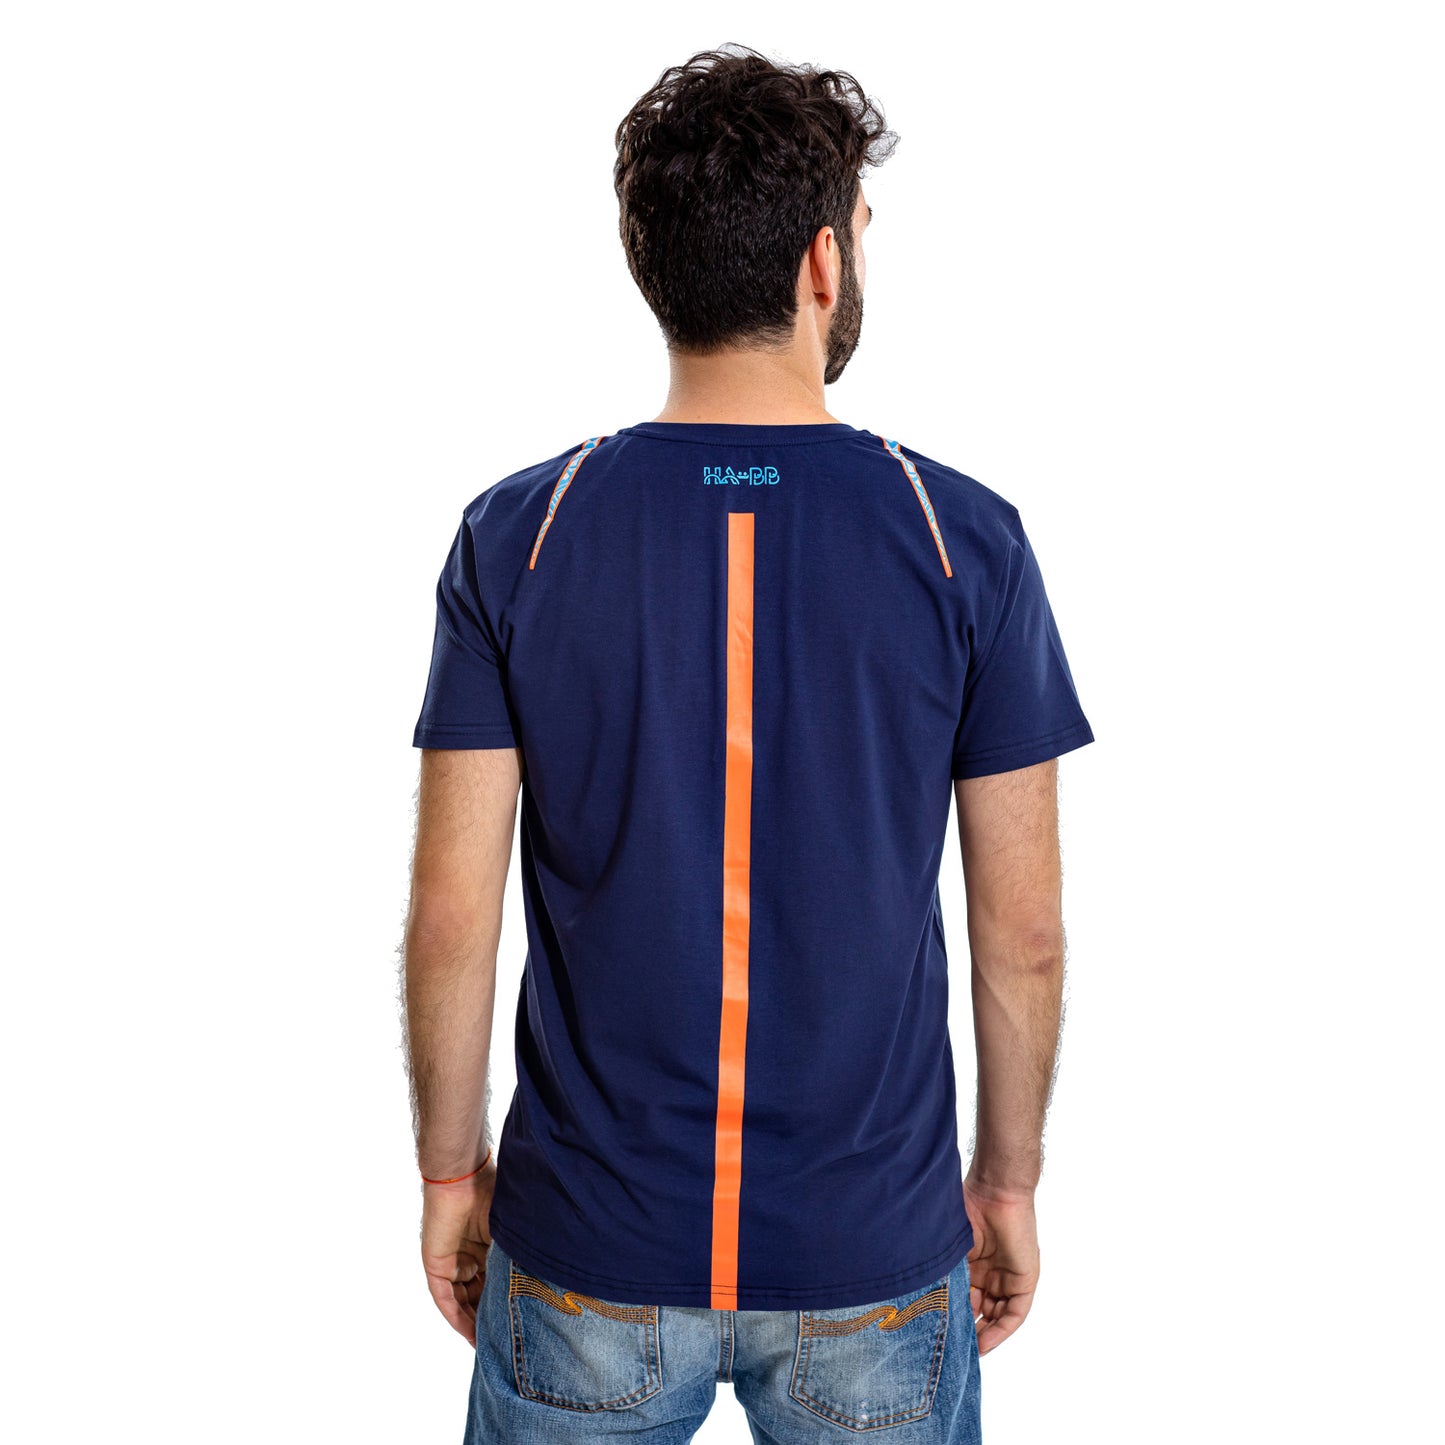 Oryx, Tradition, WWF, blue t-shirt, tee, blue, orange print, man, back view, model